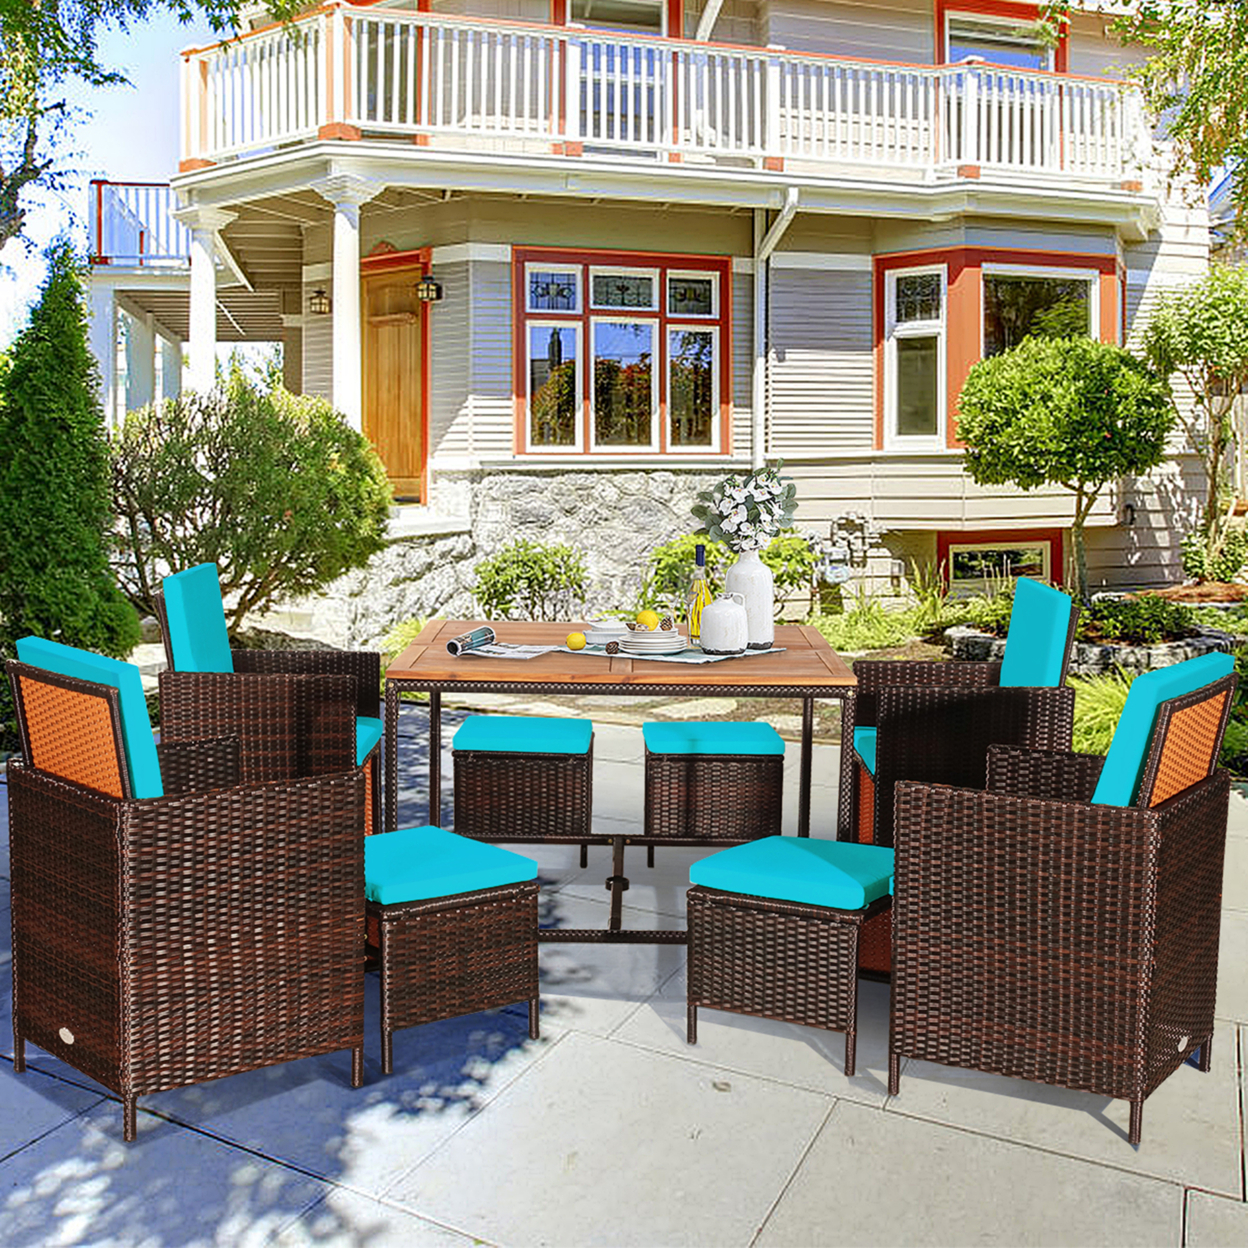 9PCS Rattan Wicker Dining Set Patio Outdoor Furniture Set W/ Turquoise Cushion